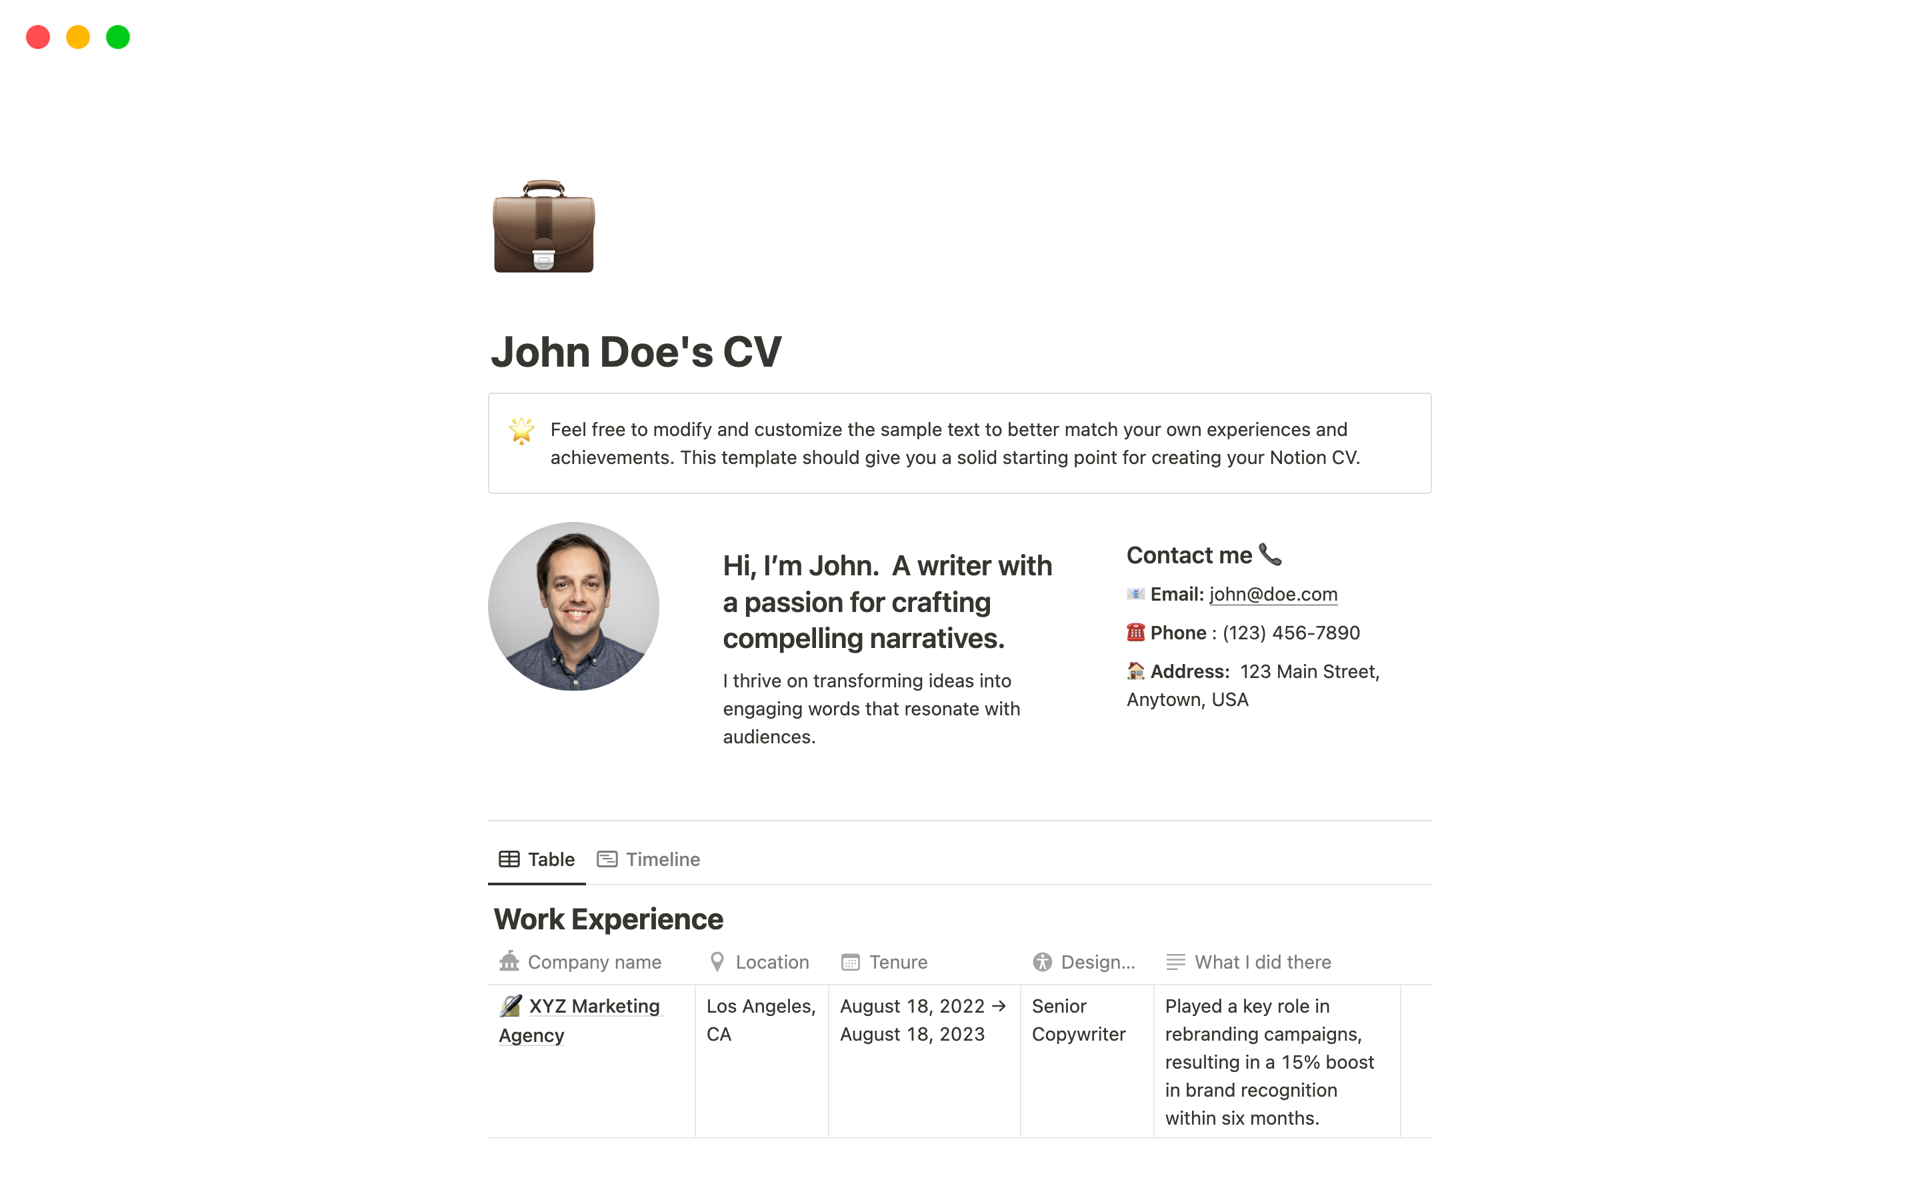 A template preview for John Doe's CV